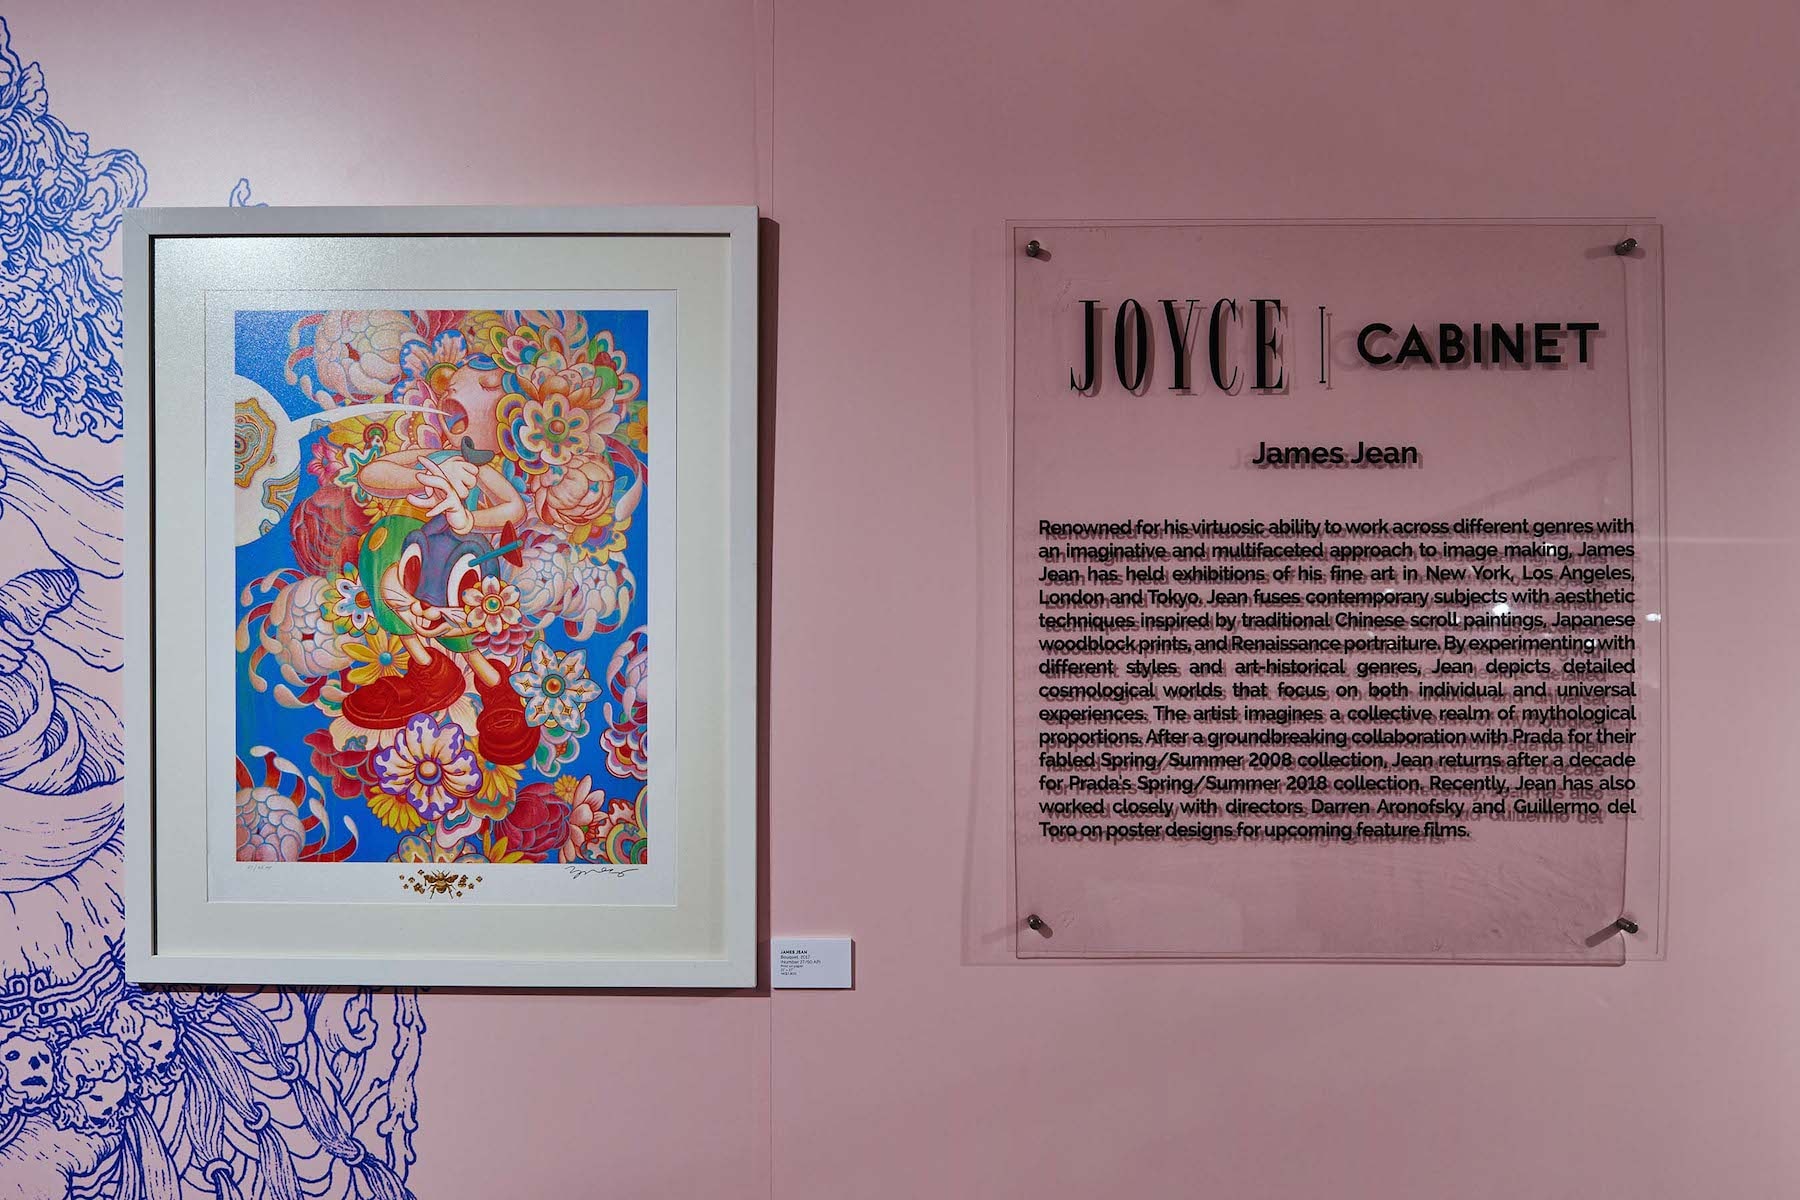 JOYCE x James Jean 藝術合作企劃正式開催